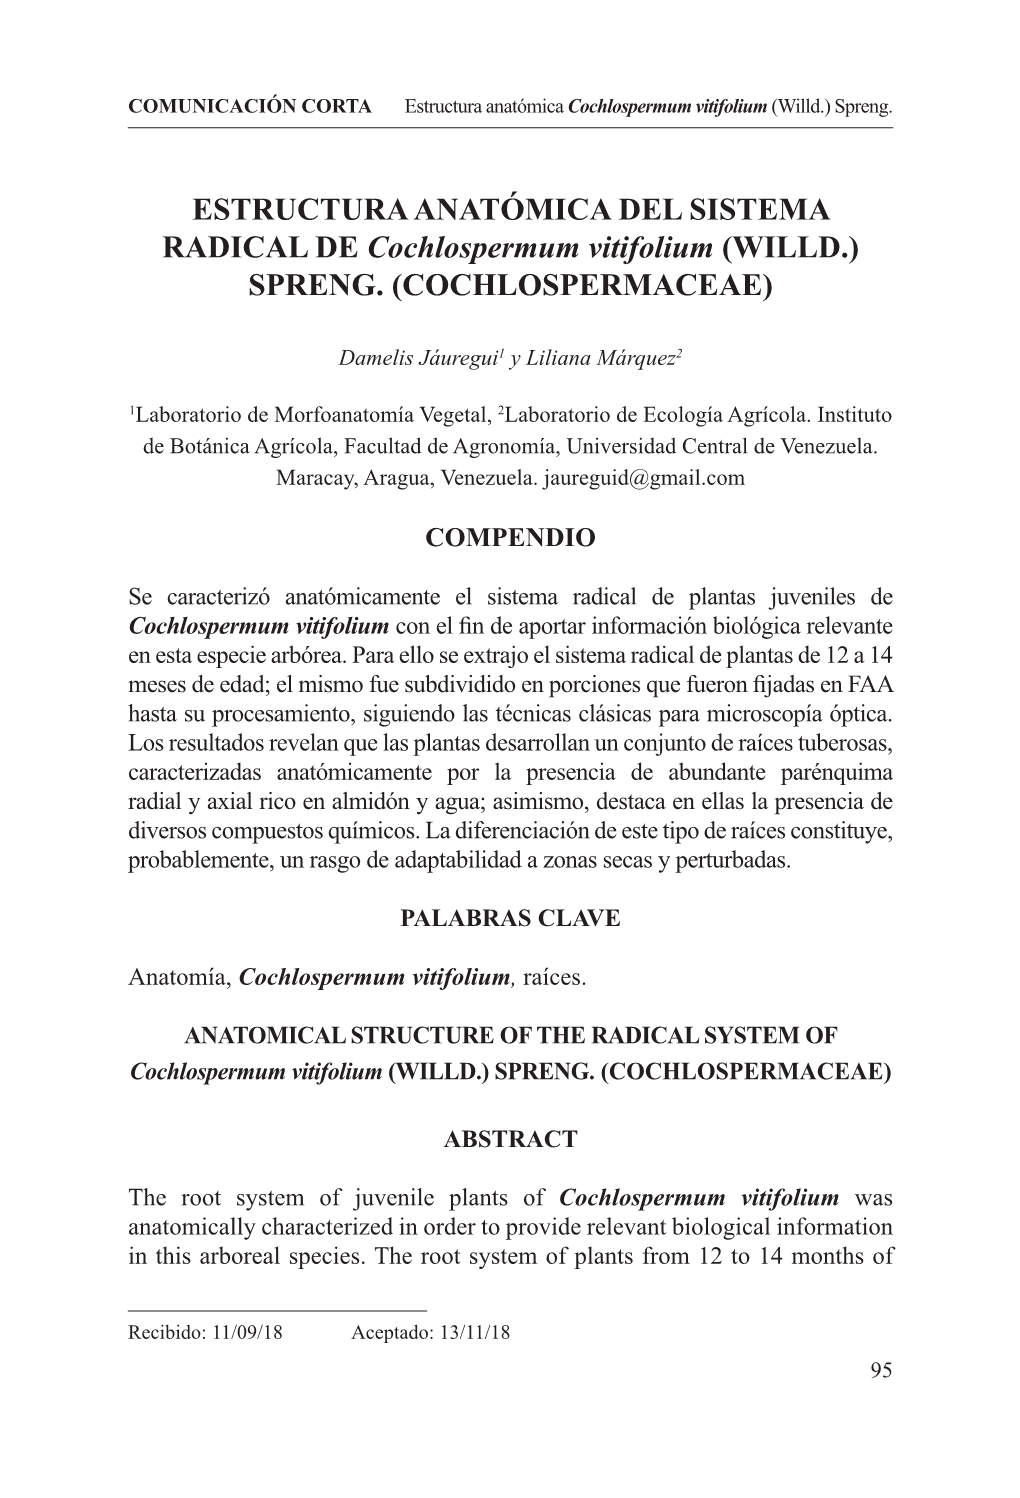 ESTRUCTURA ANATÓMICA DEL SISTEMA RADICAL DE Cochlospermum Vitifolium (WILLD.) SPRENG